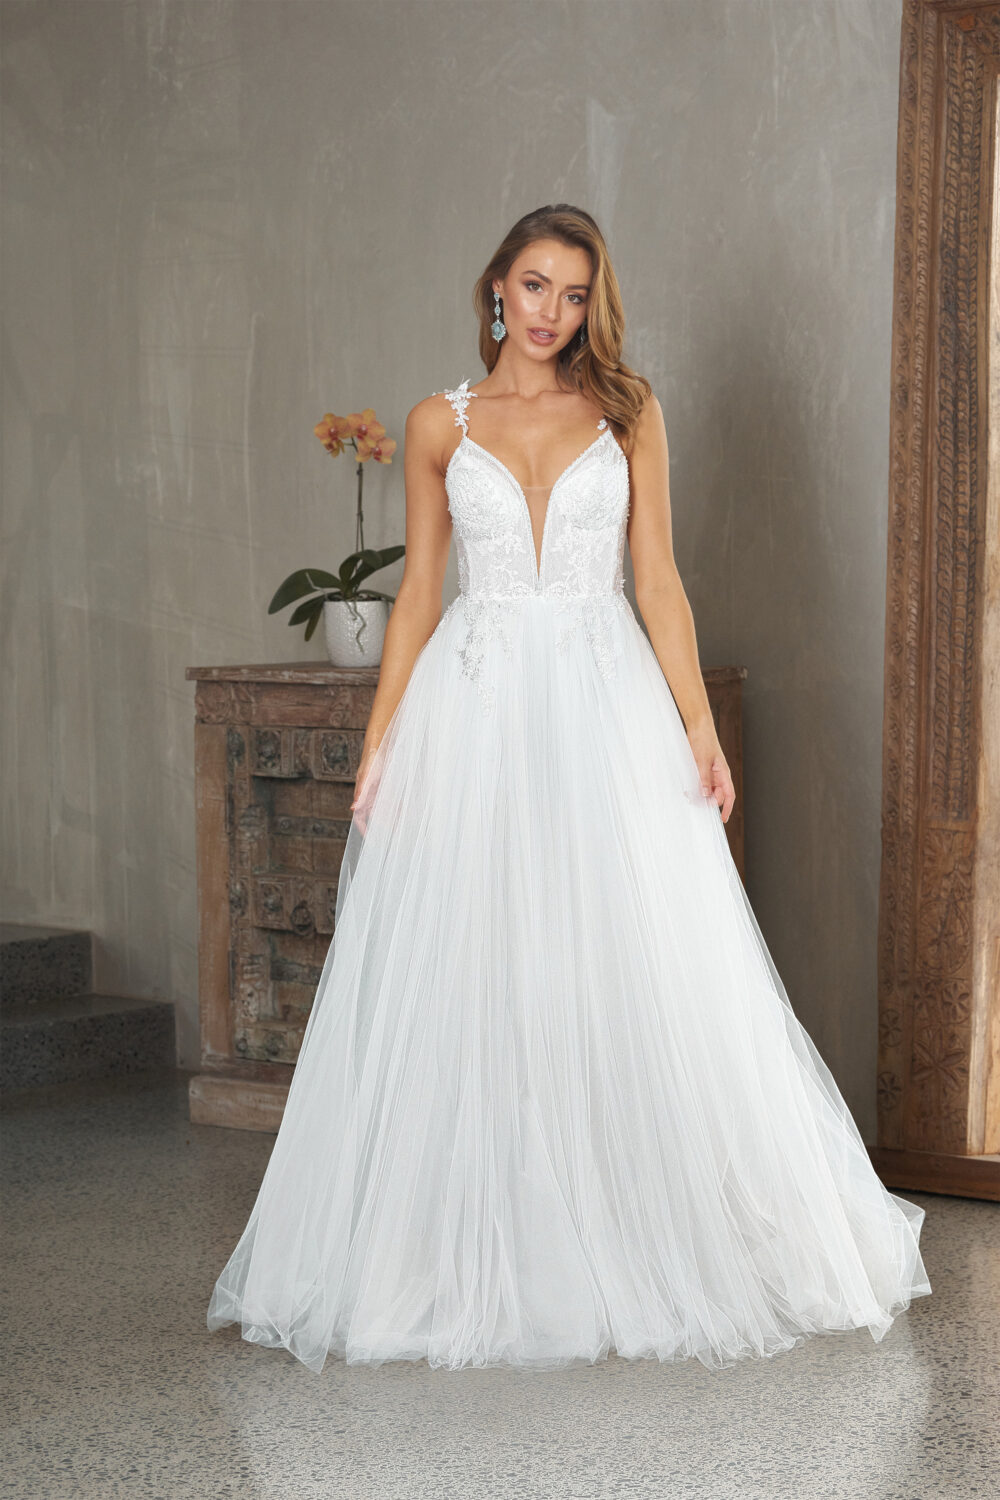 MIA TC327 Wedding Dresses dress by Tania Olsen Designs